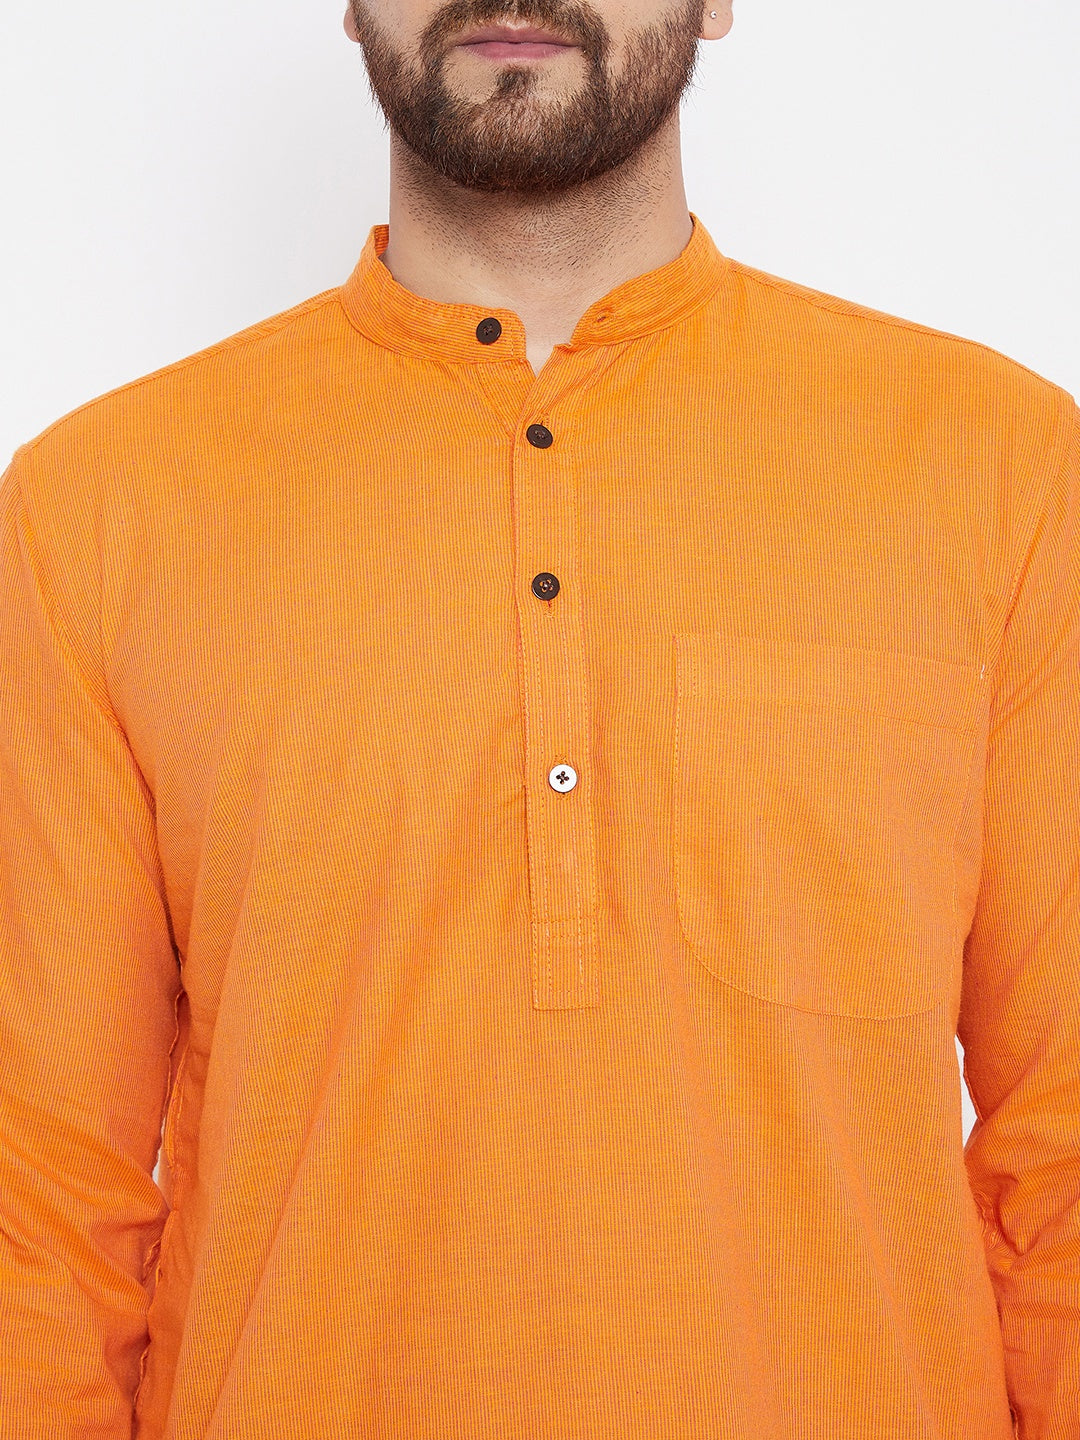 Men's Pure Cotton Striped Orange Kurta2 - Even Apparels